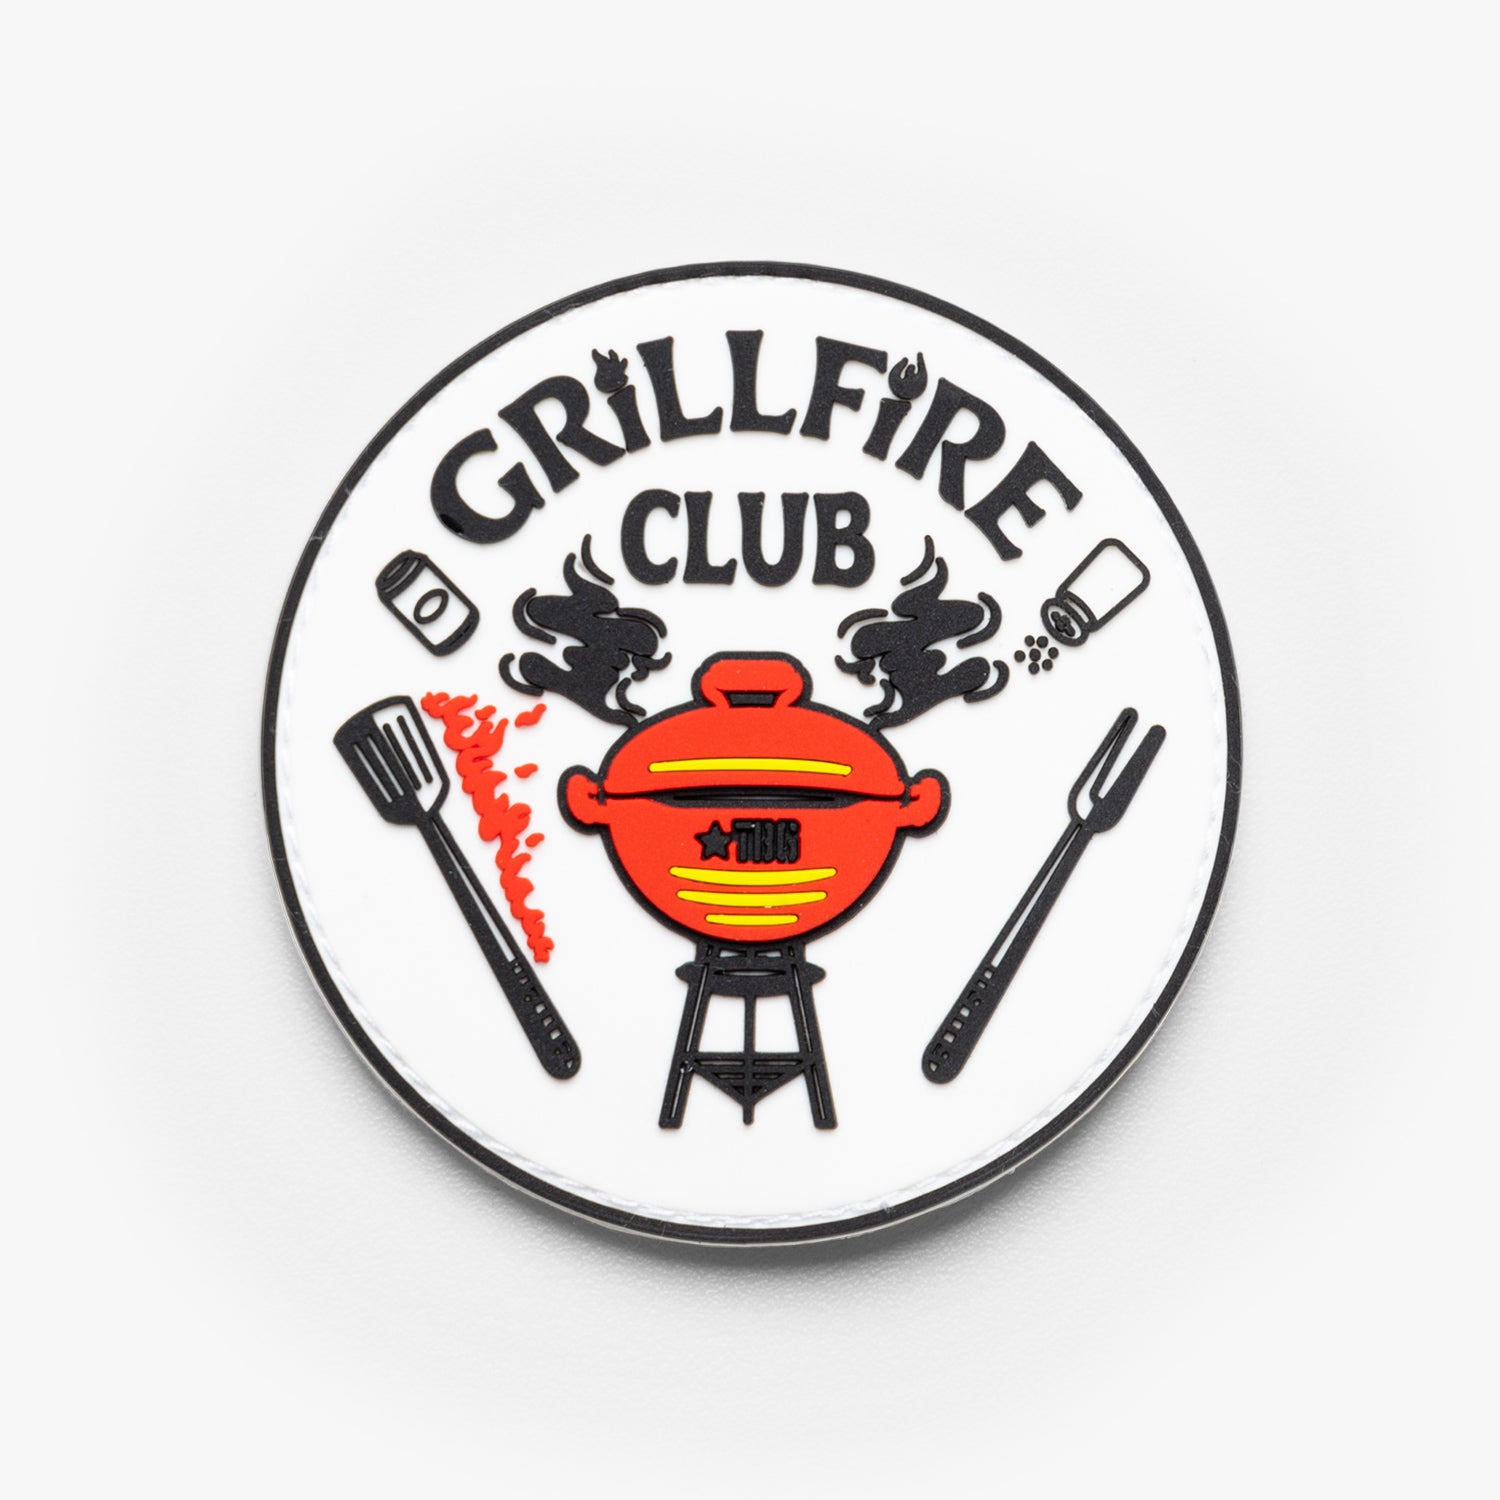 Grillfire Club Patch